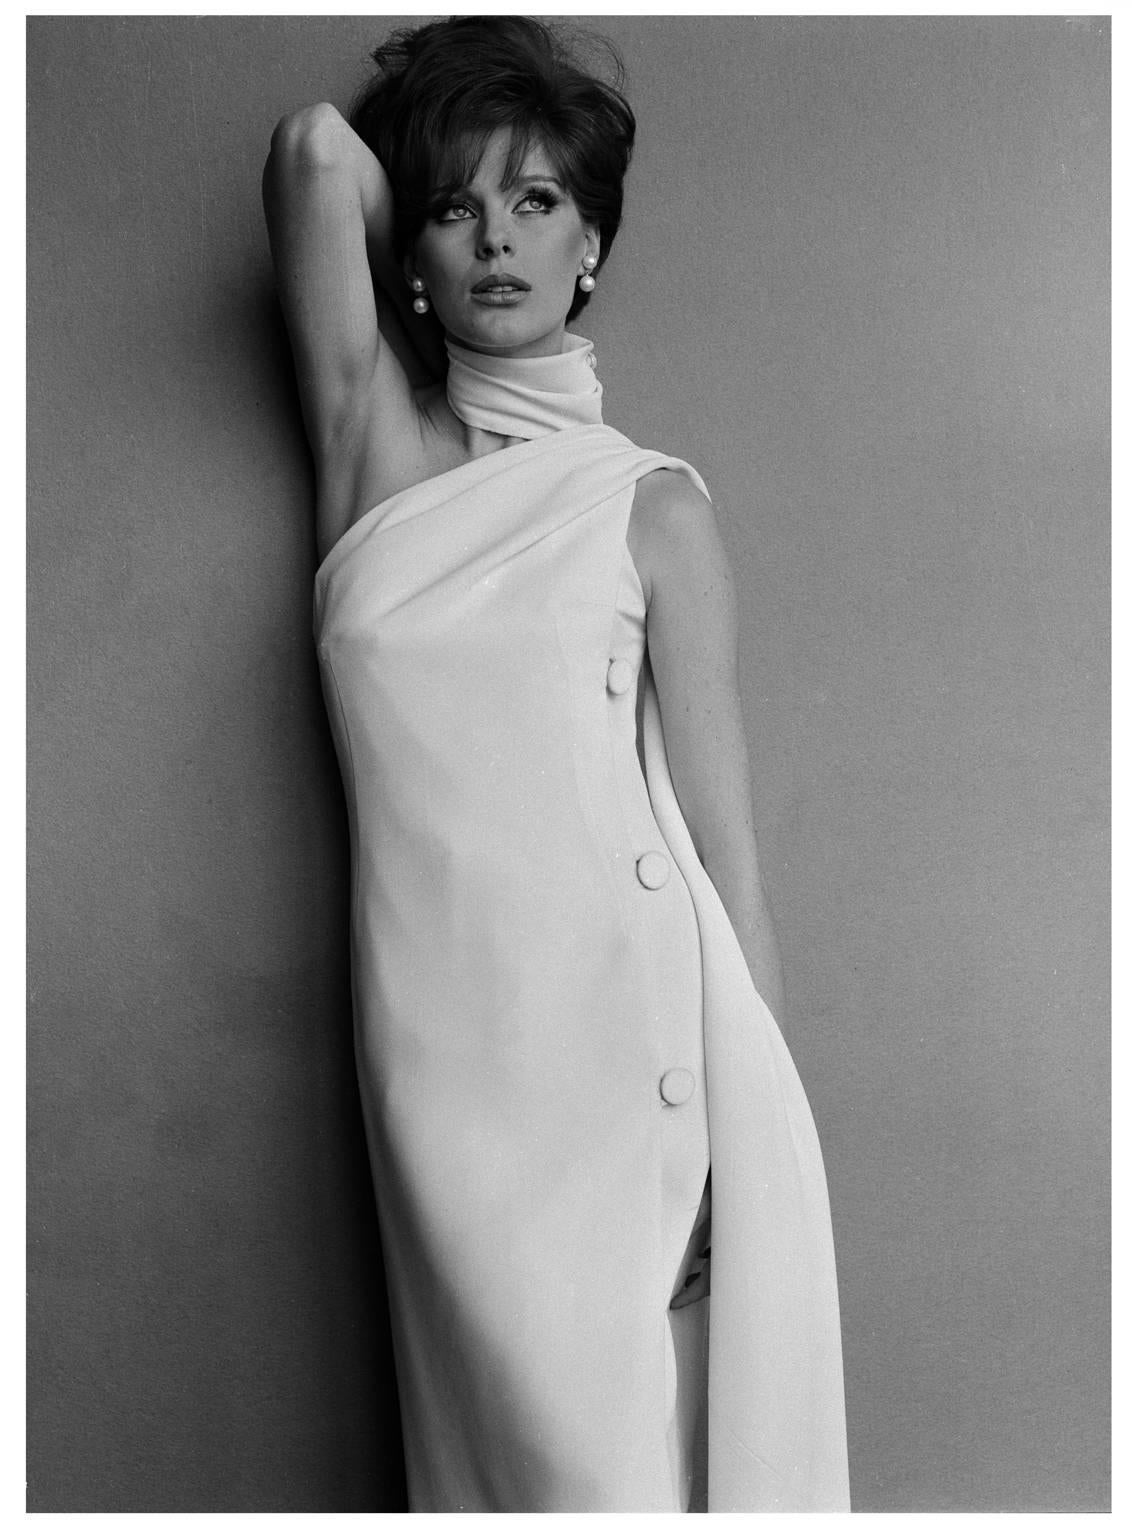 John French Figurative Photograph - 'Button Dress'  V&A Portfolio Fashion Photography Limited Edition